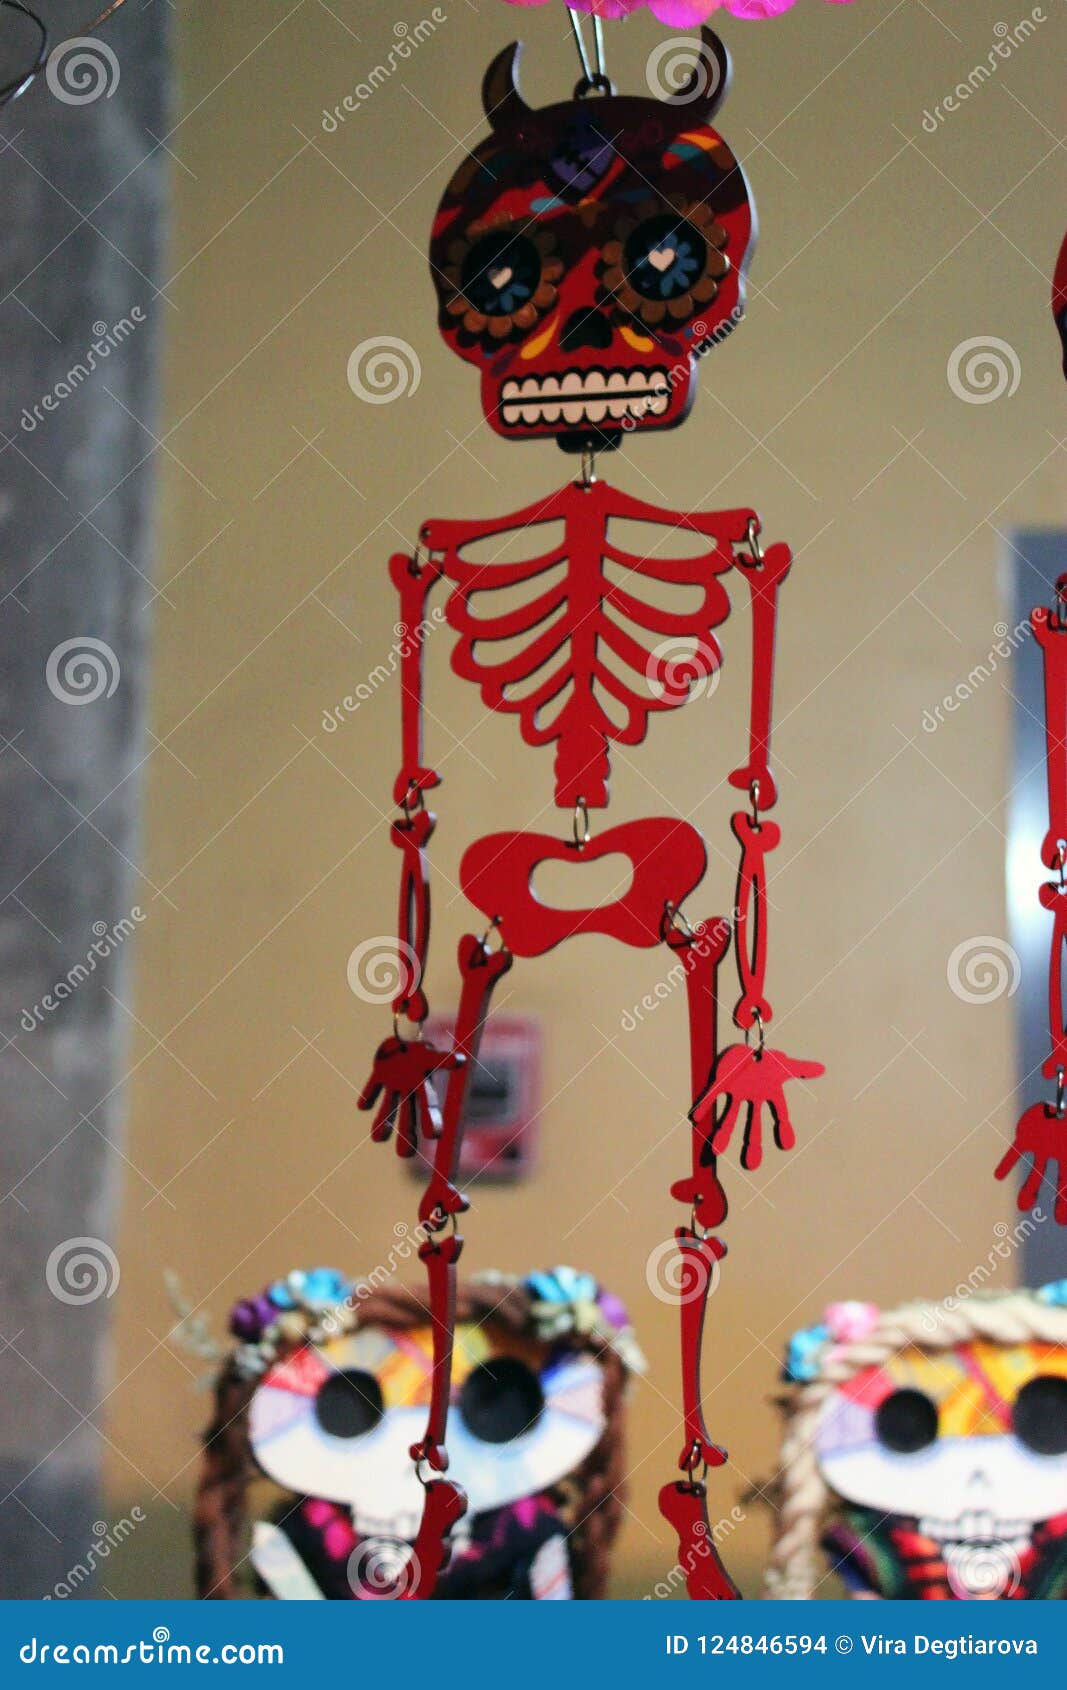 Day of The Dead DOD 6.25" Tall El Diablito Red Demon Skeleton Sculpture Figurine 